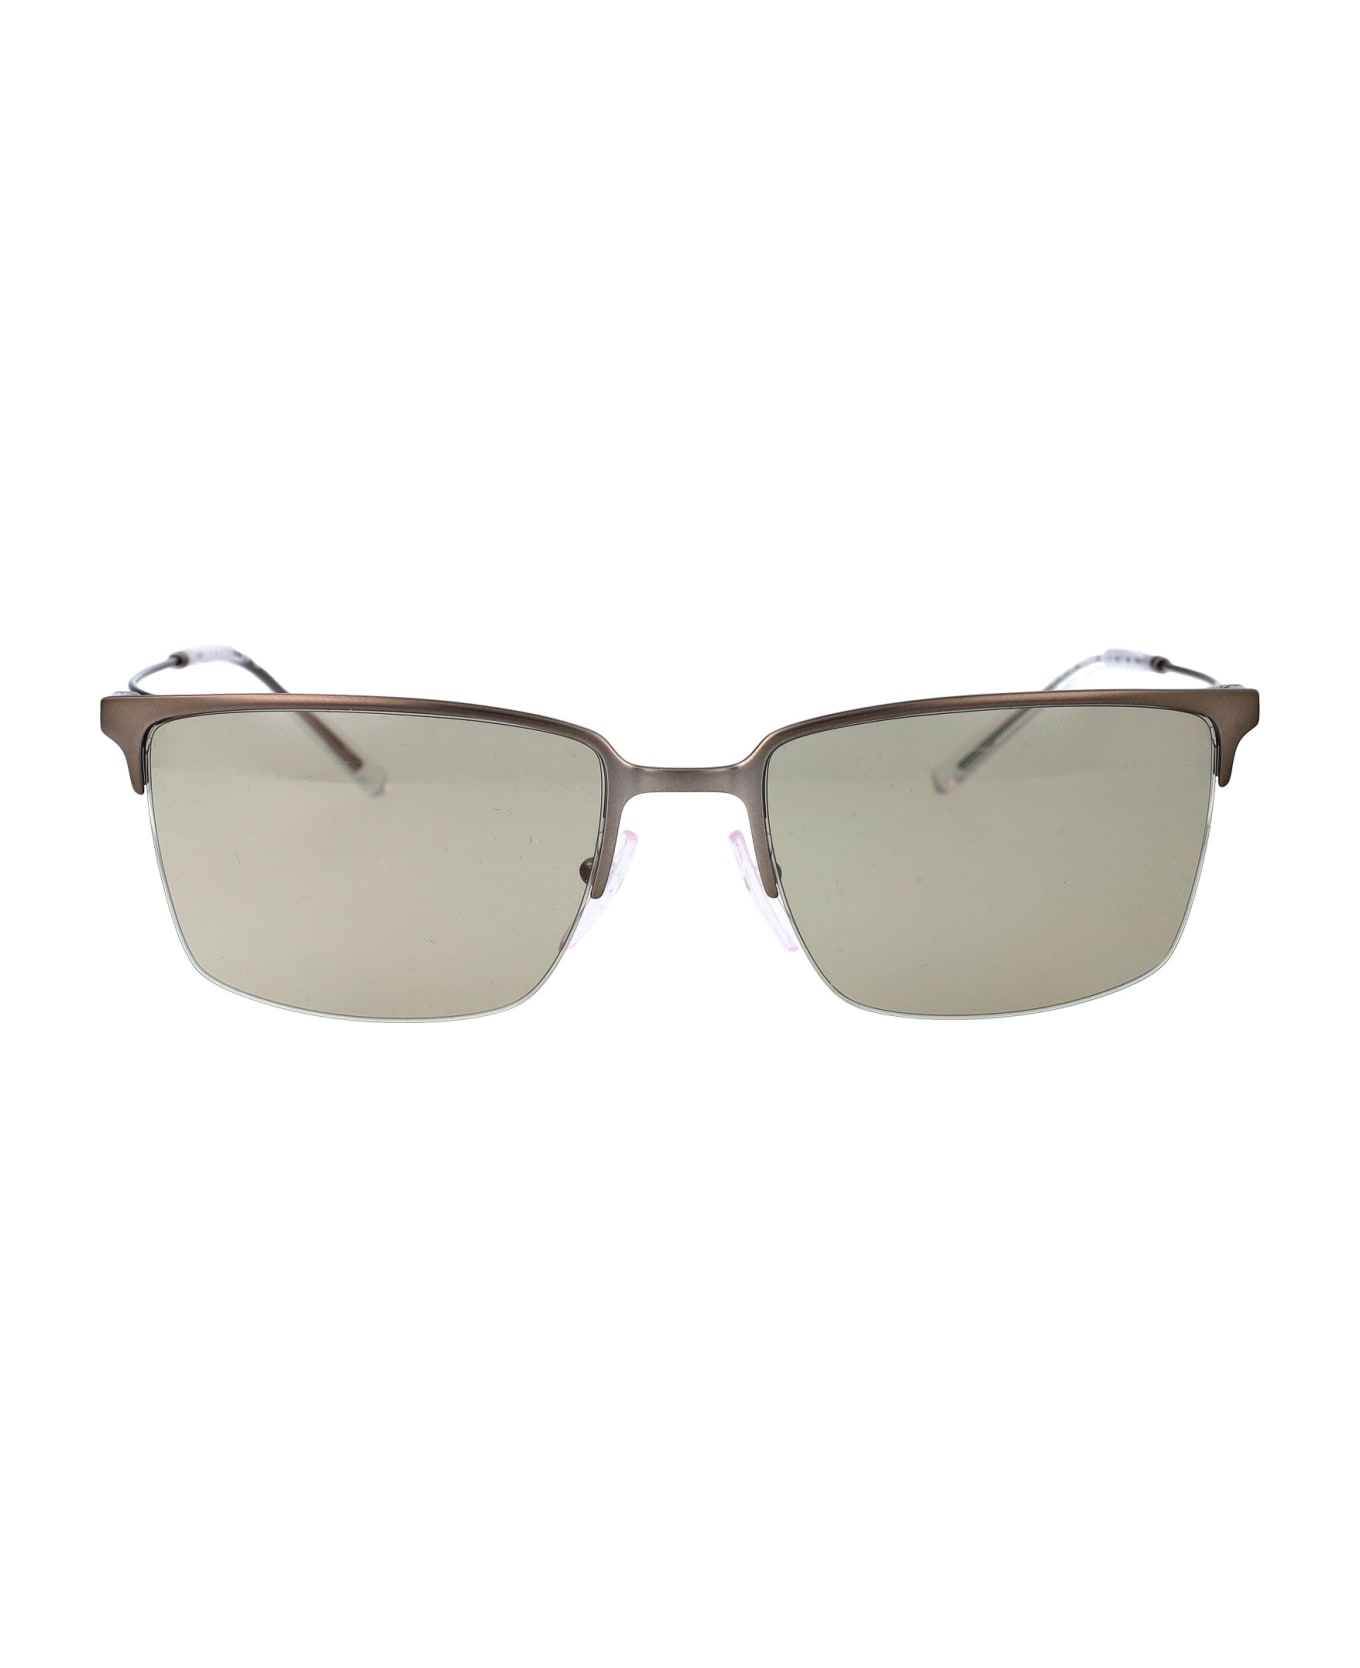 Emporio Armani 0ea2155 Sunglasses - 3003/3 Matte Gunmetal サングラス